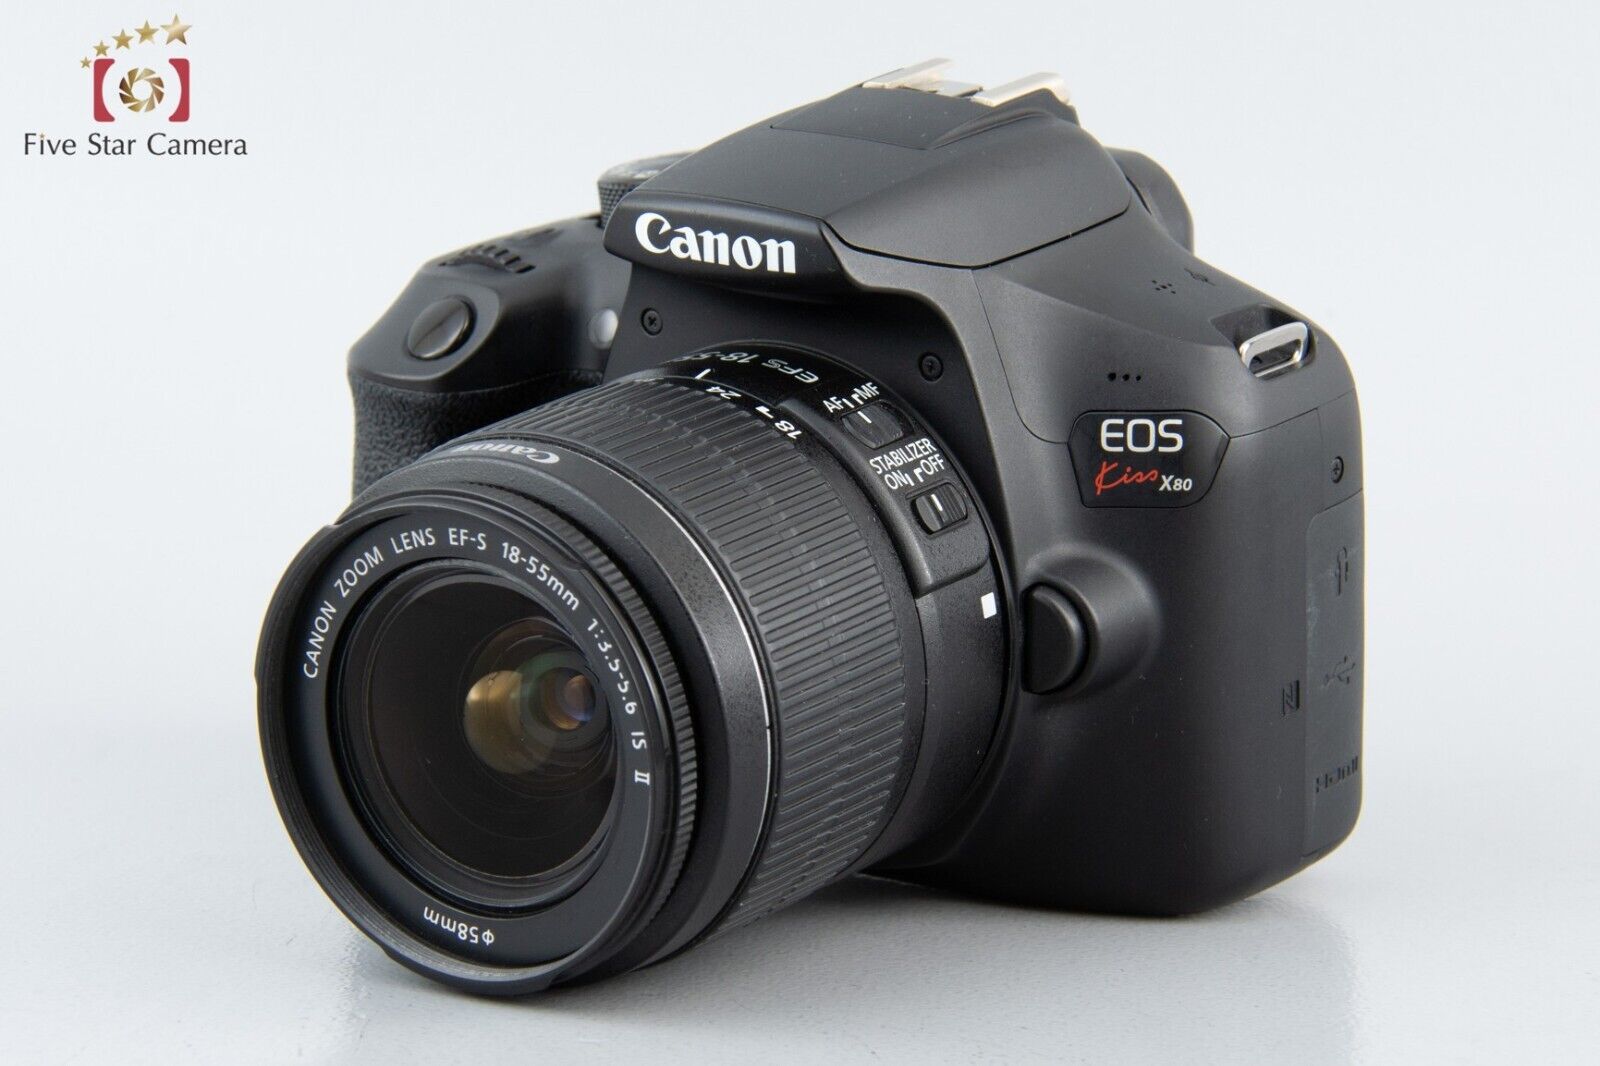 Very Good!! Canon EOS Kiss X80 / Rebal T6 / 1300D 18.0 MP DSLR 18-55mm Lens Kit